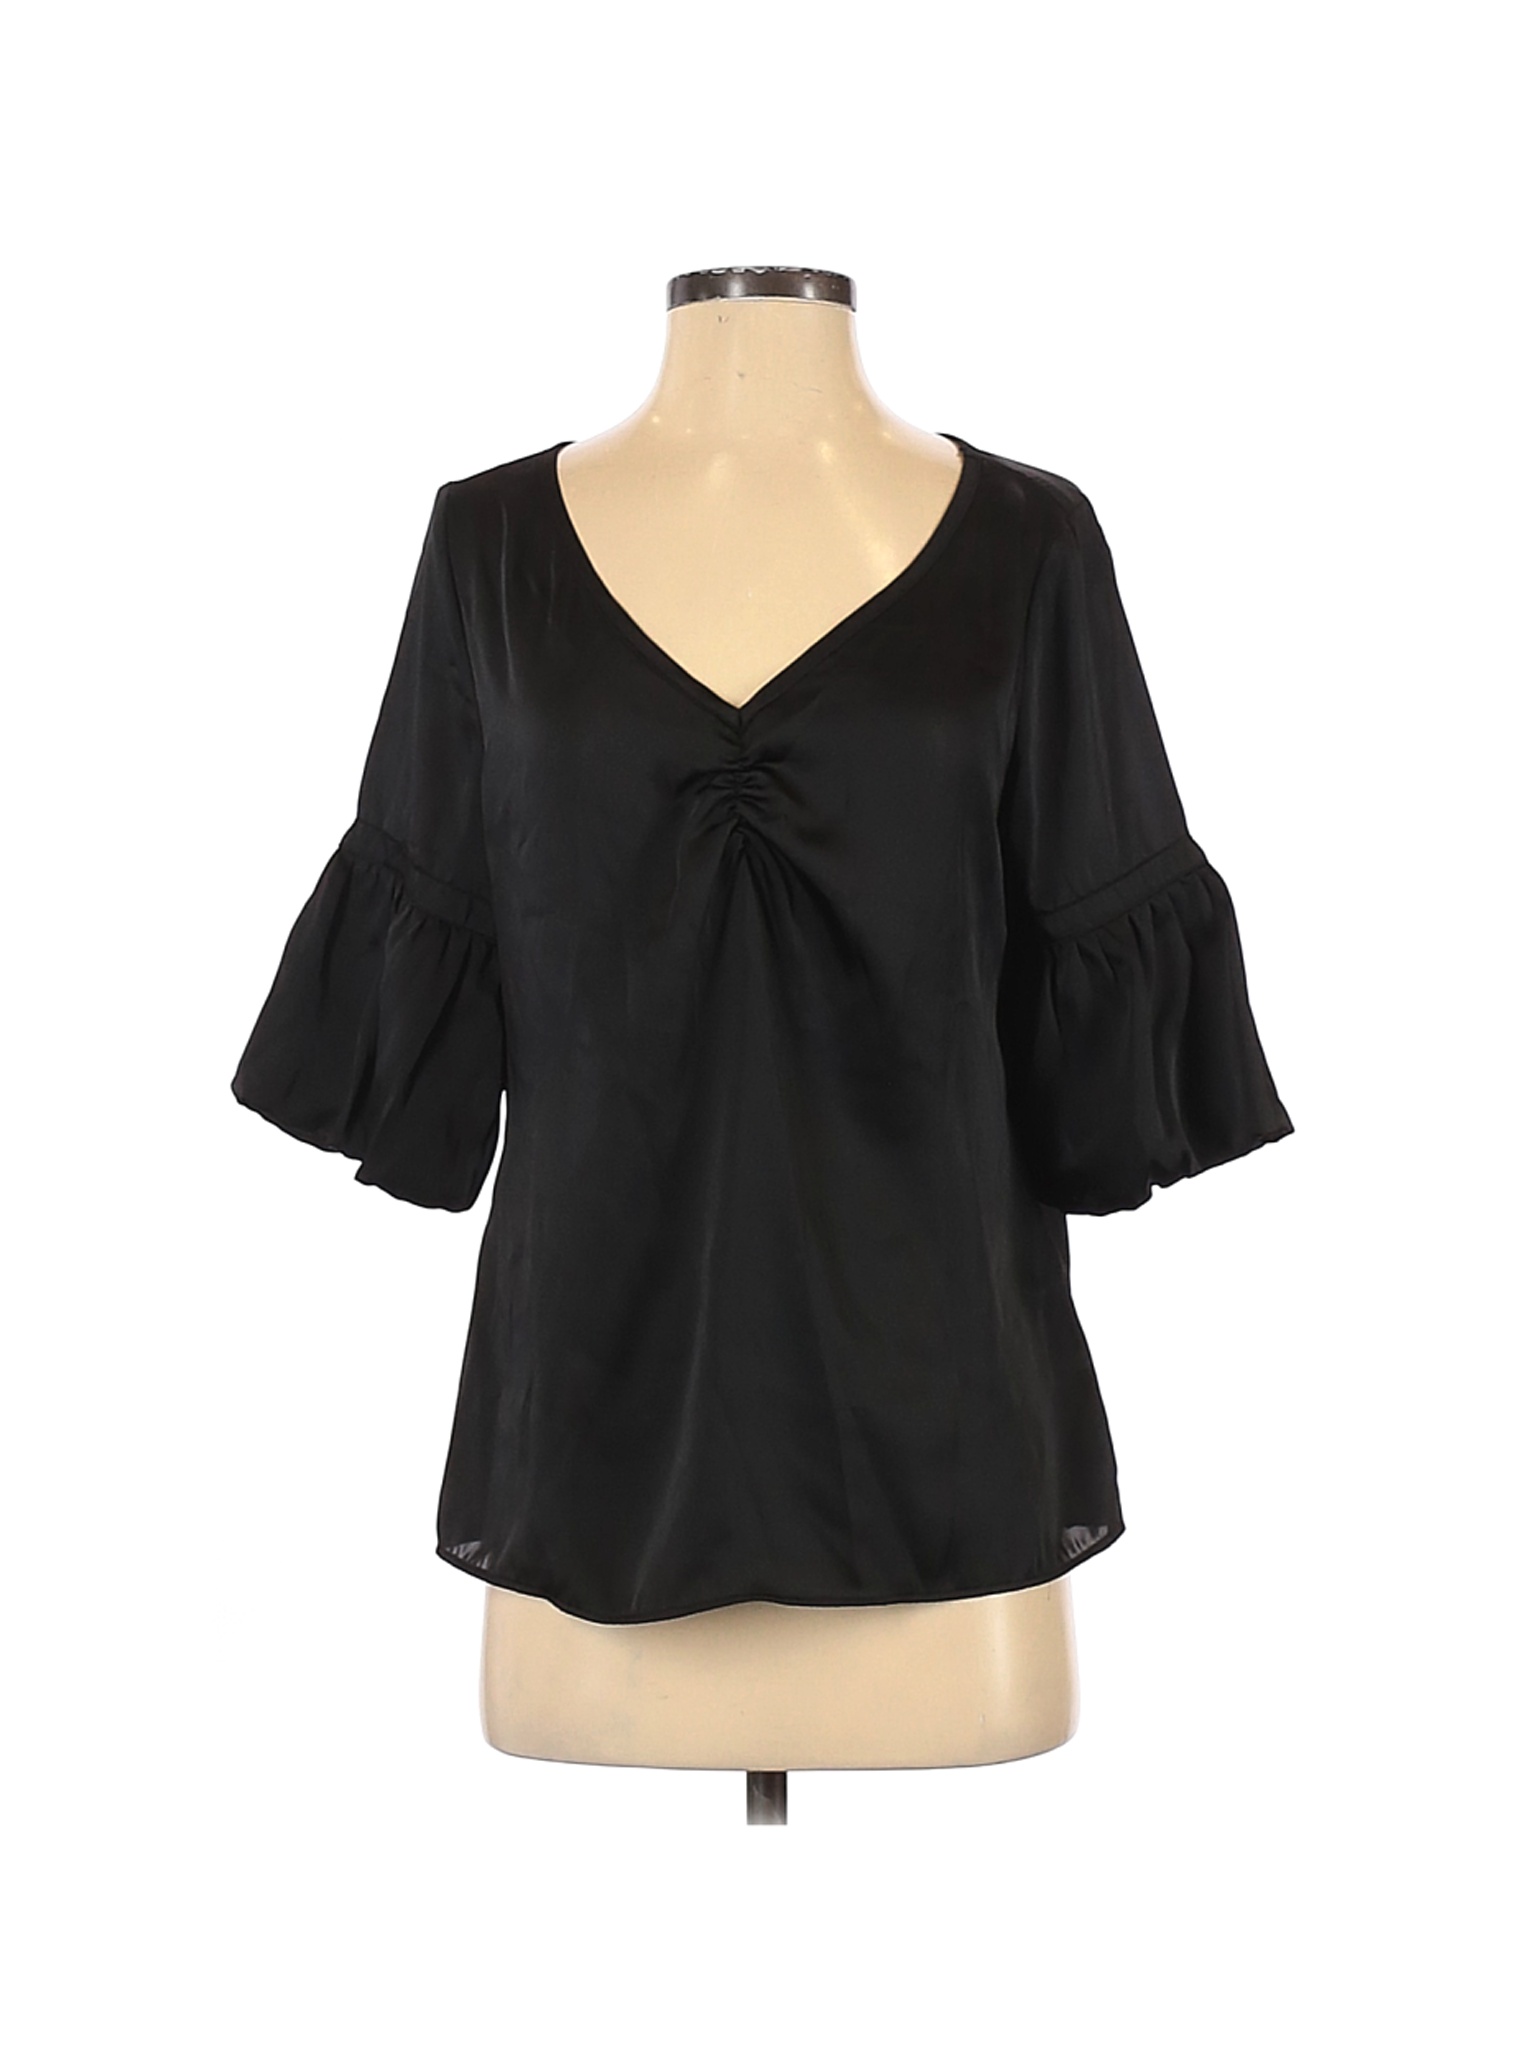 Attention Women Black 3/4 Sleeve Blouse M | eBay